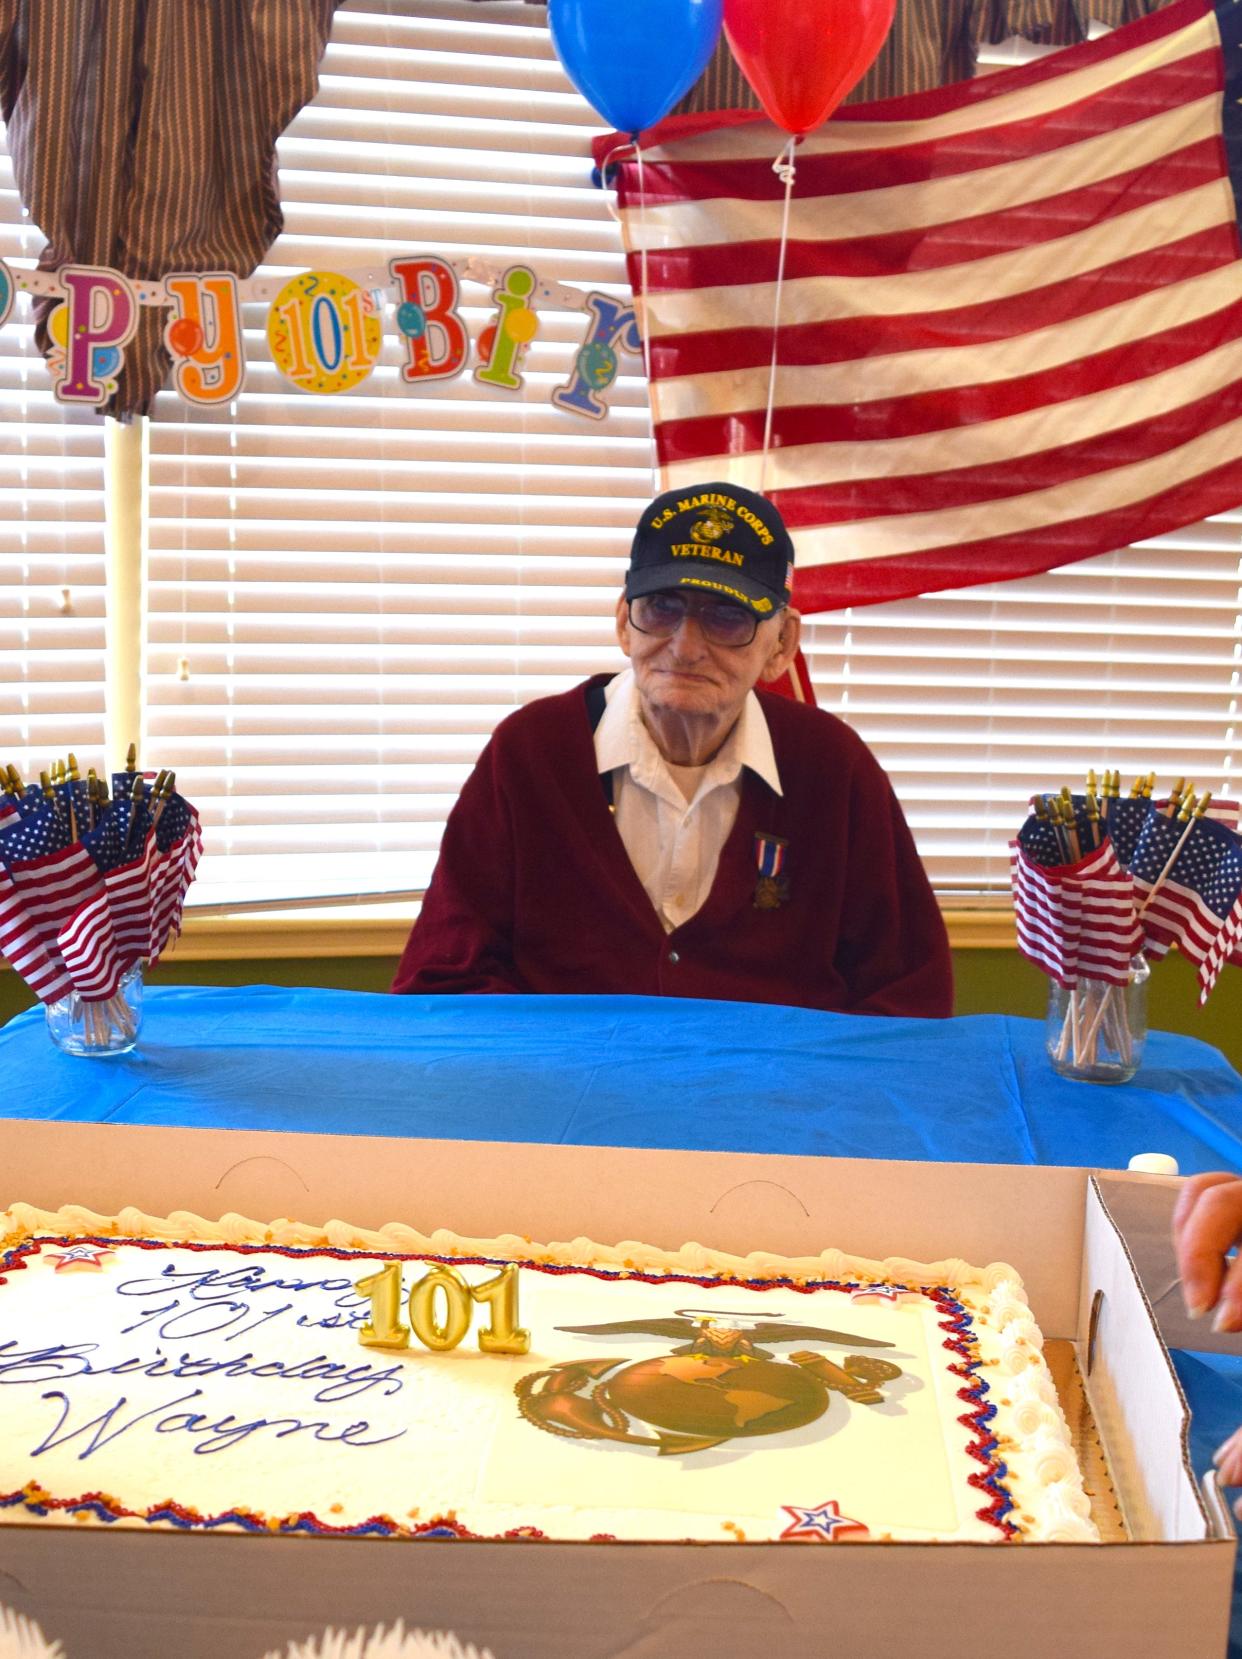 Wayne Heffelfinger looks forward to enjoying some of his birthday cake at a celebration of his 101st birthday at Sycamore Run Nursing & Rehabilitation Center near Millersburg.